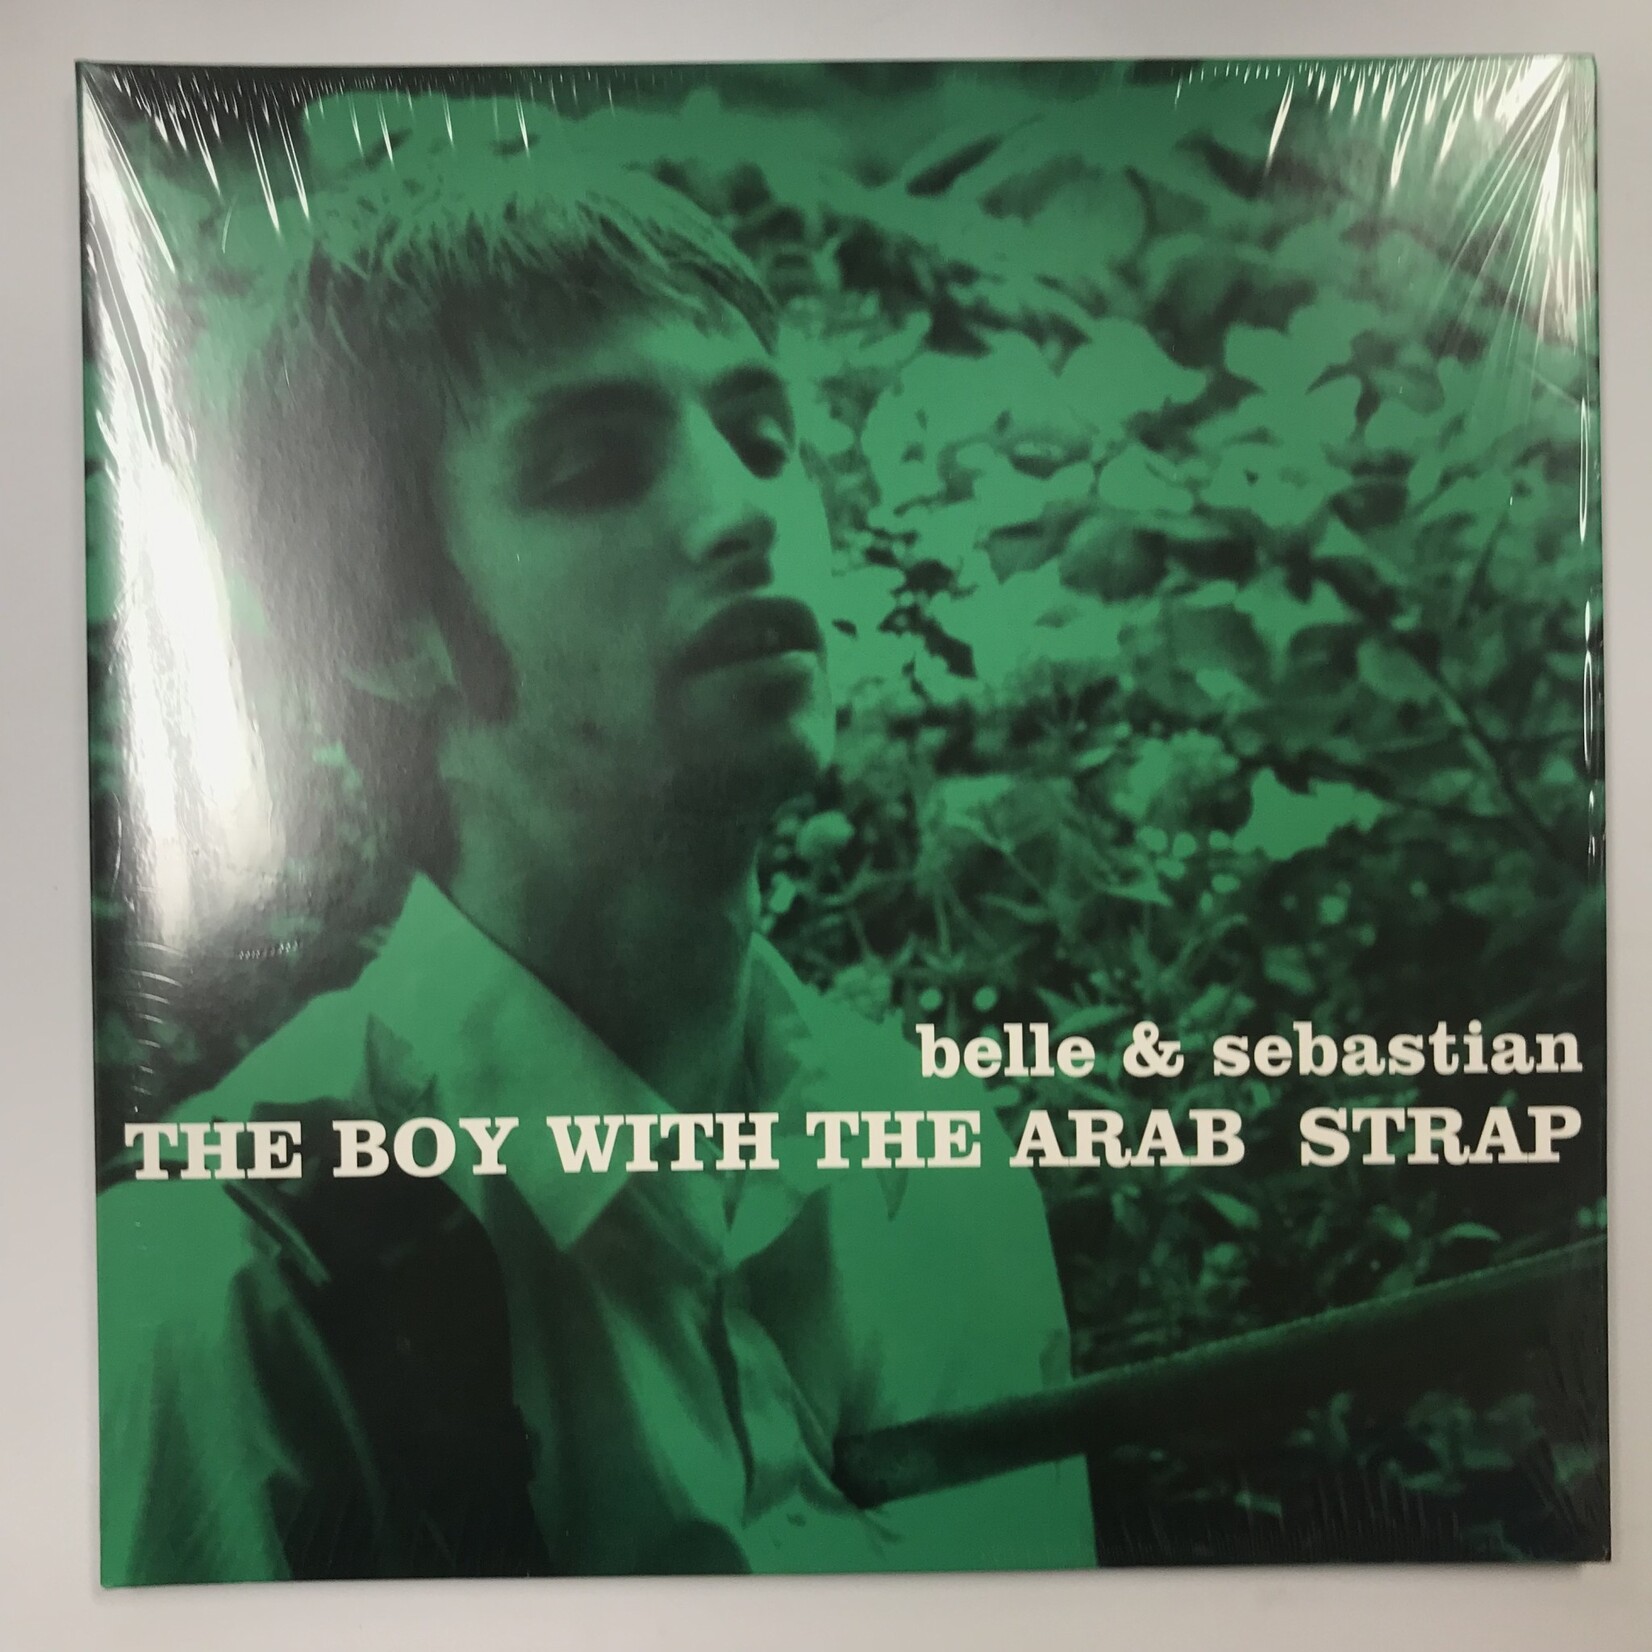 Belle & Sebastian - The Boy With The Arab Strap - Vinyl LP (NEW)